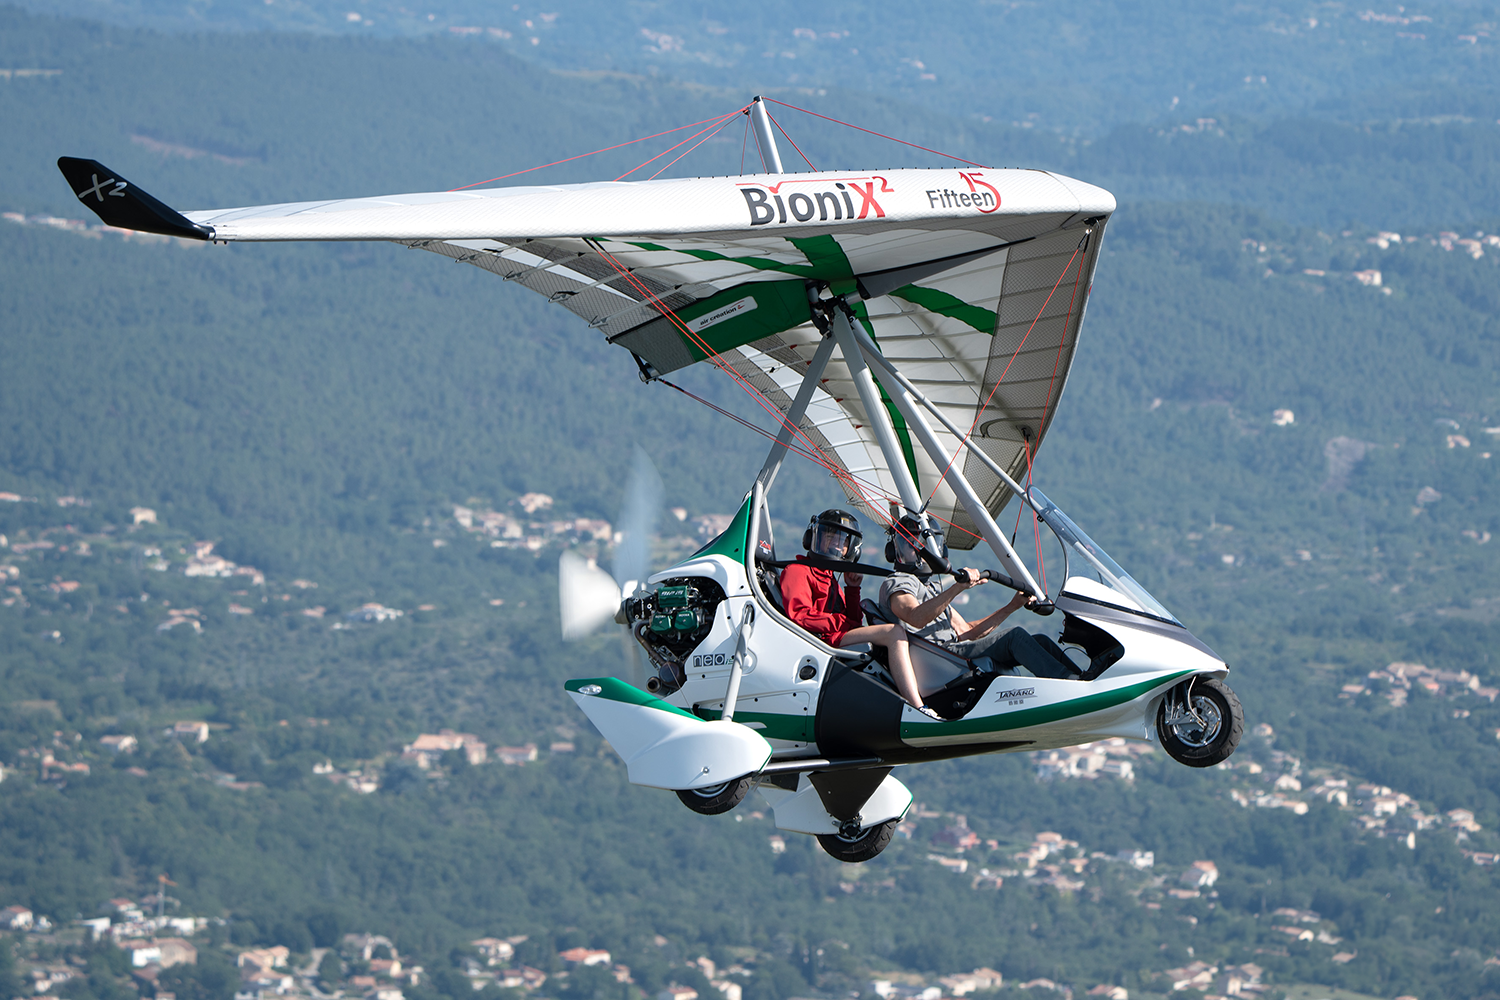 fly/en-vol-bionix2-15-tanarg-neo-product-ulm-pendulaire-microlihgt-ultralight-trike-wing-5.png